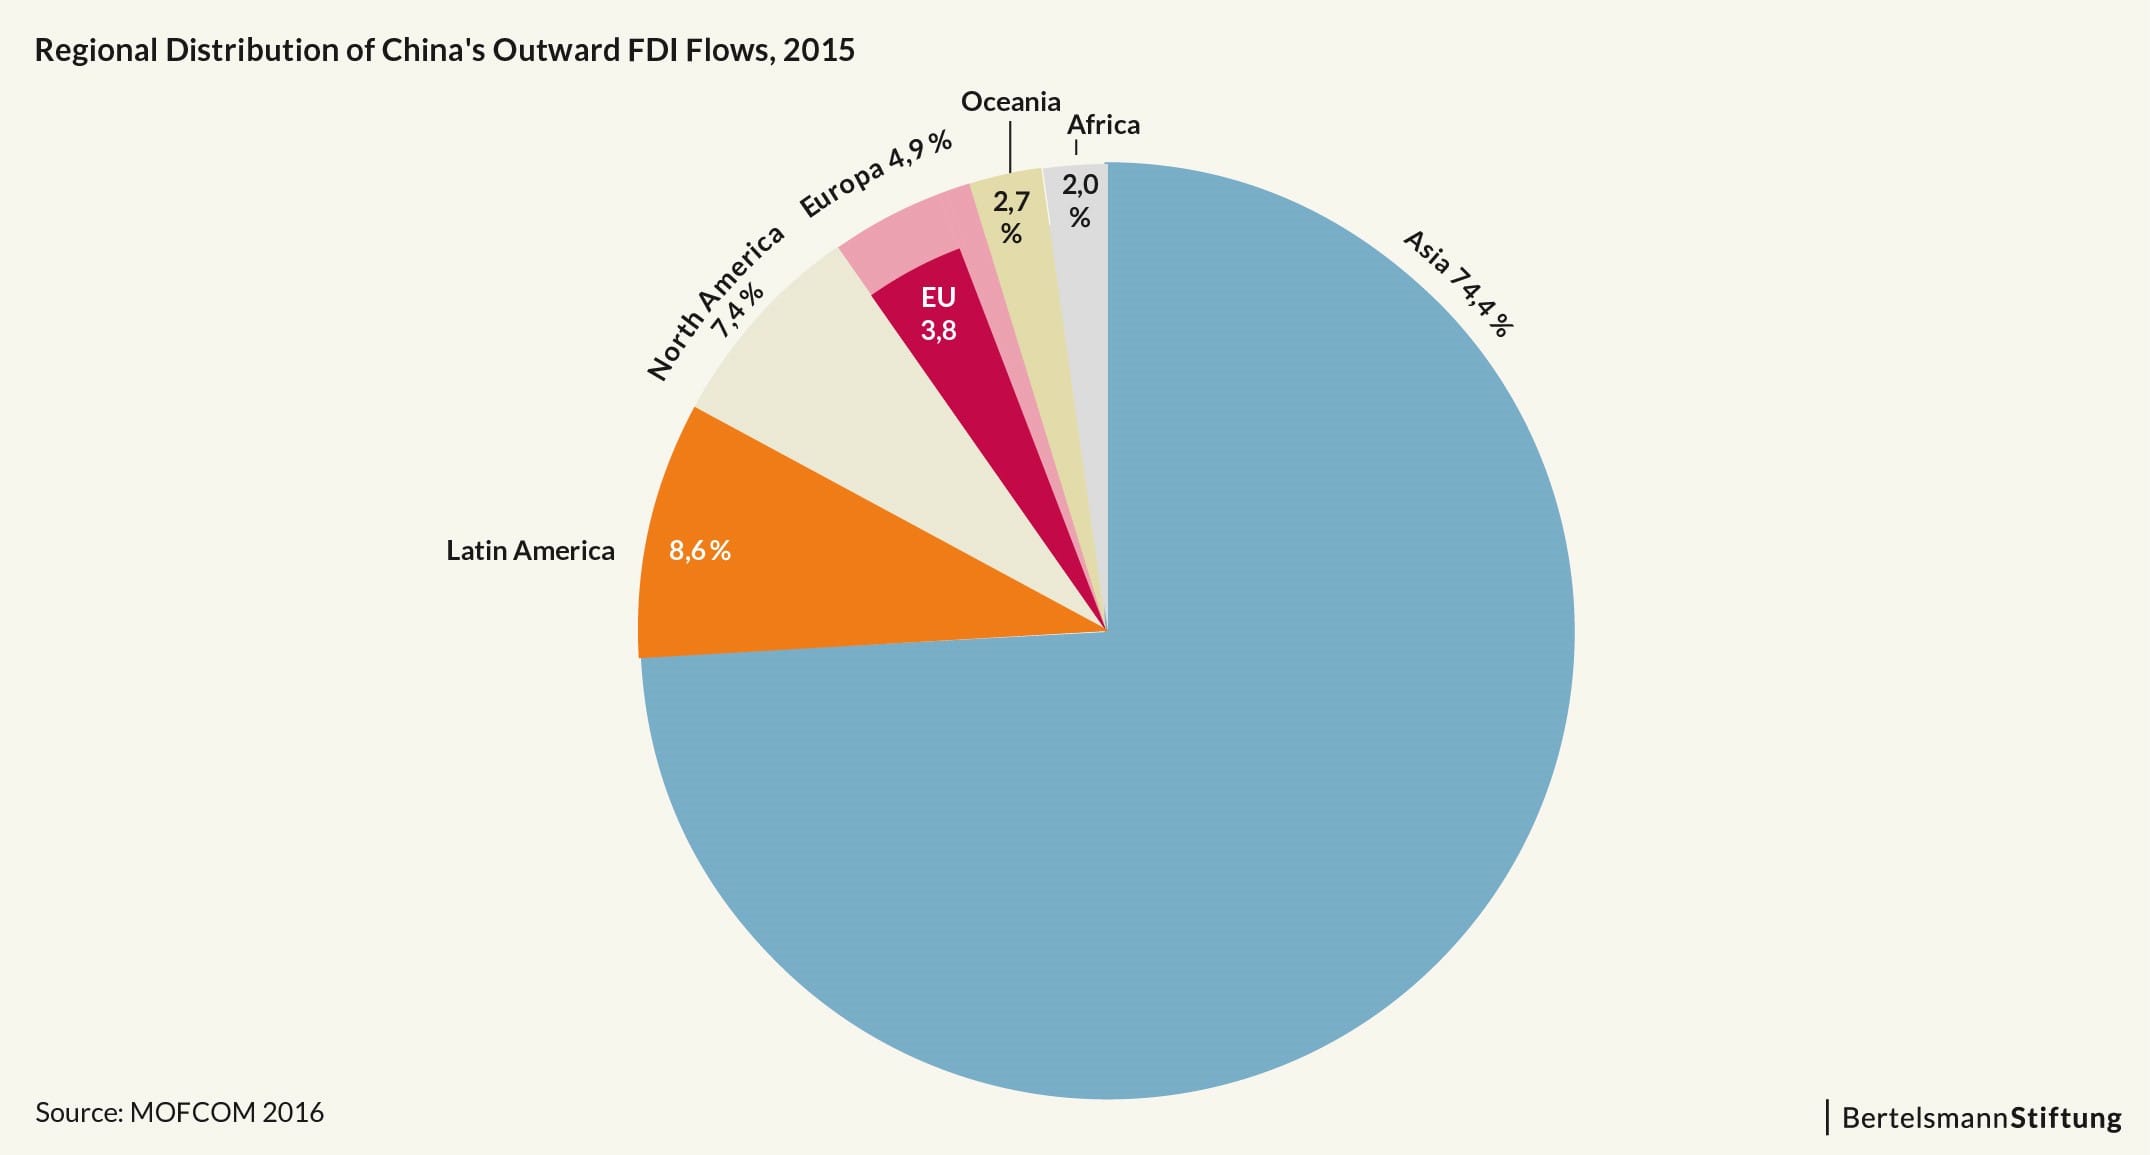 Regional Distribution of Chinese OFDI Flows 2015